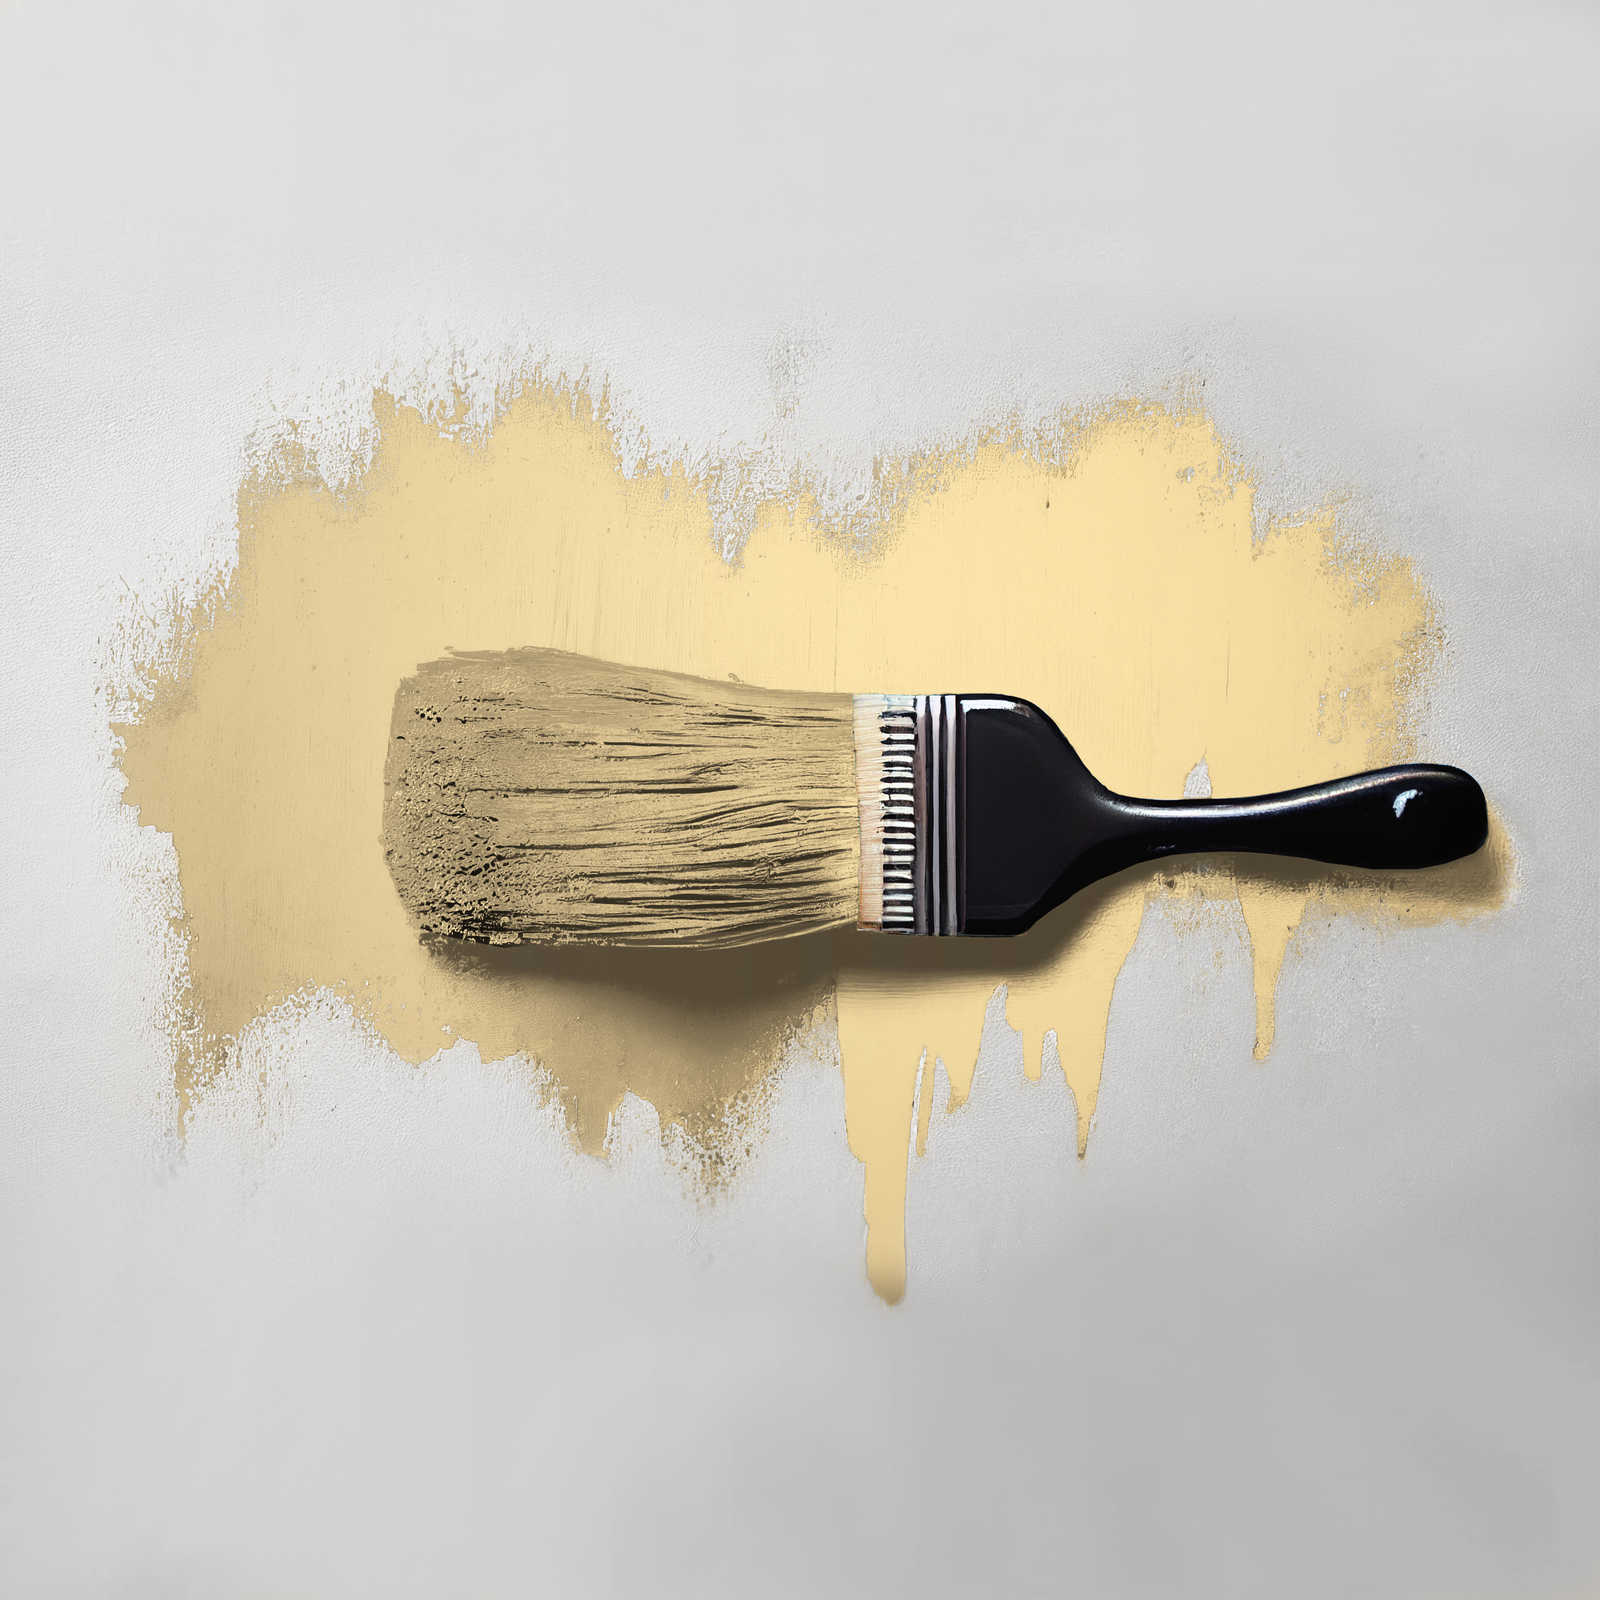             Peinture murale TCK5004 »Gentel Ginger« en jaune tendre – 5,0 litres
        